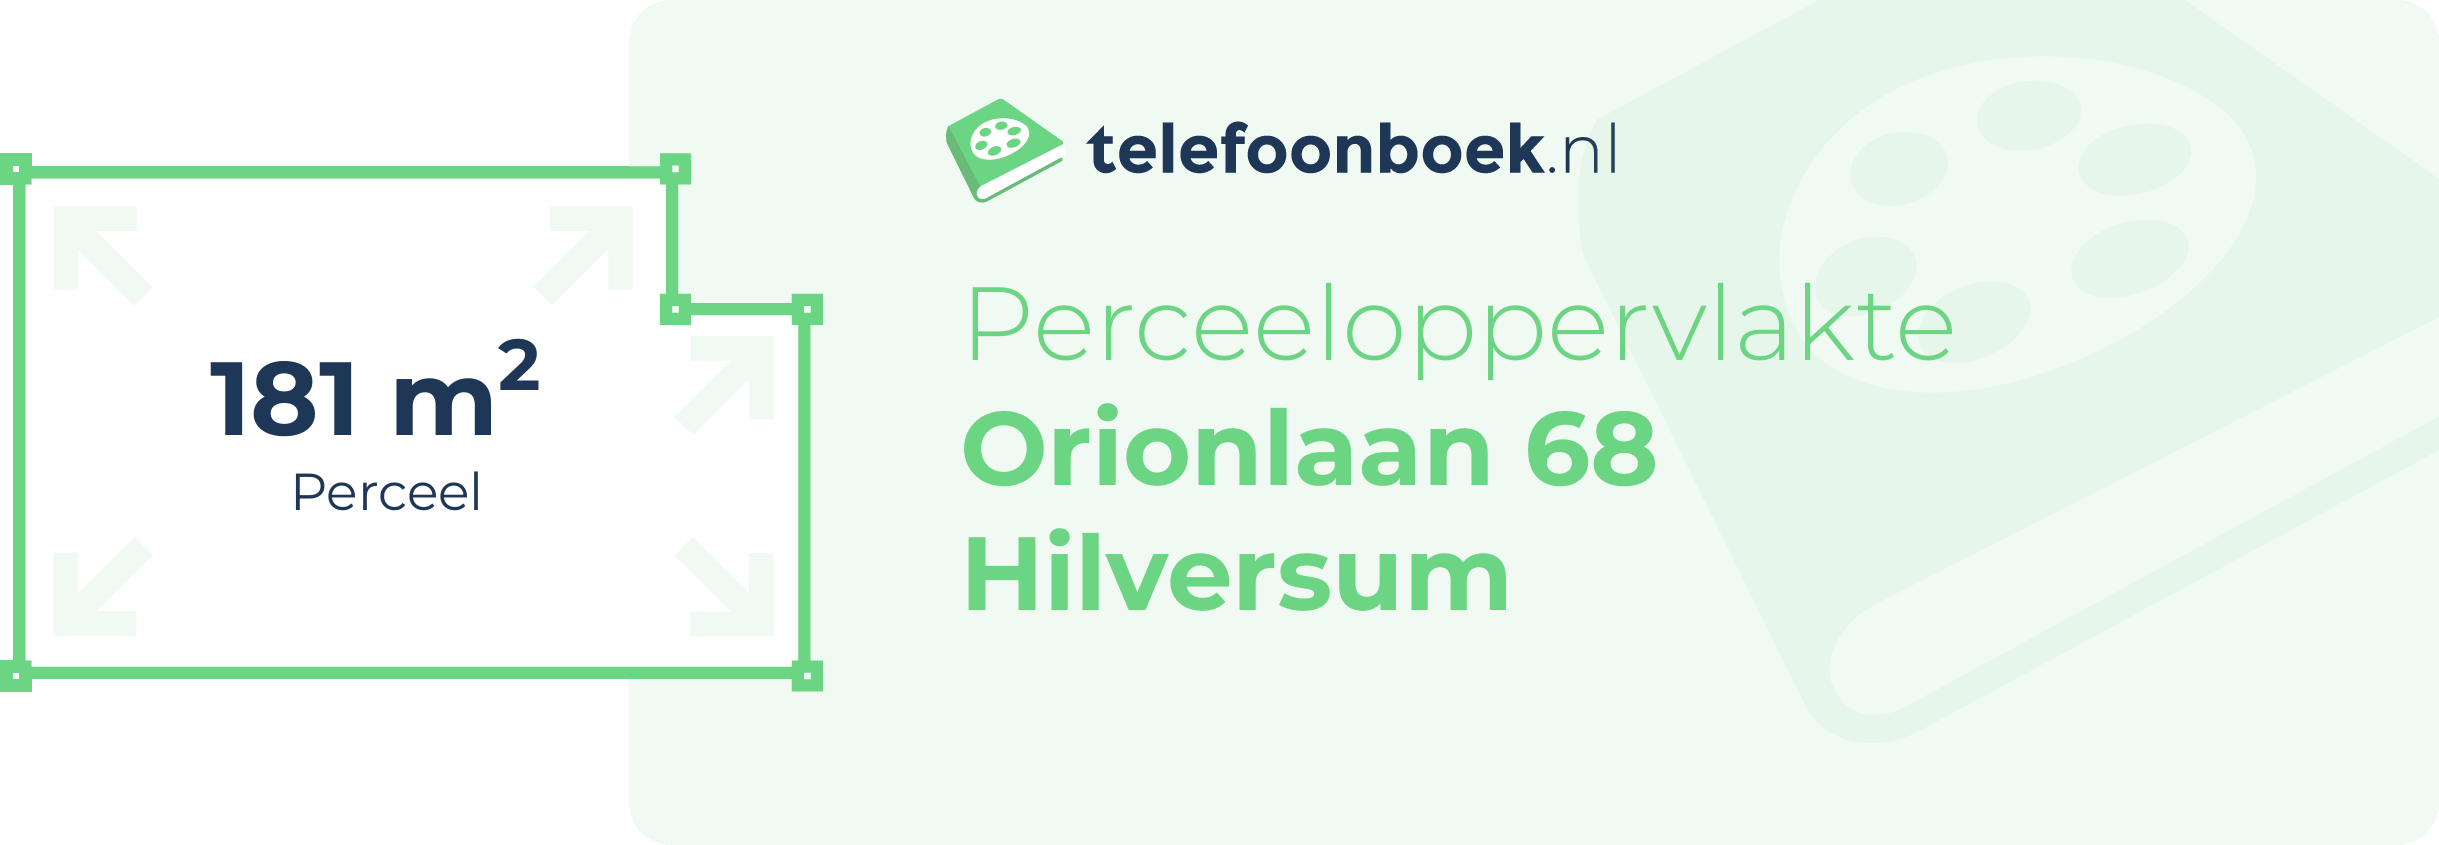 Perceeloppervlakte Orionlaan 68 Hilversum